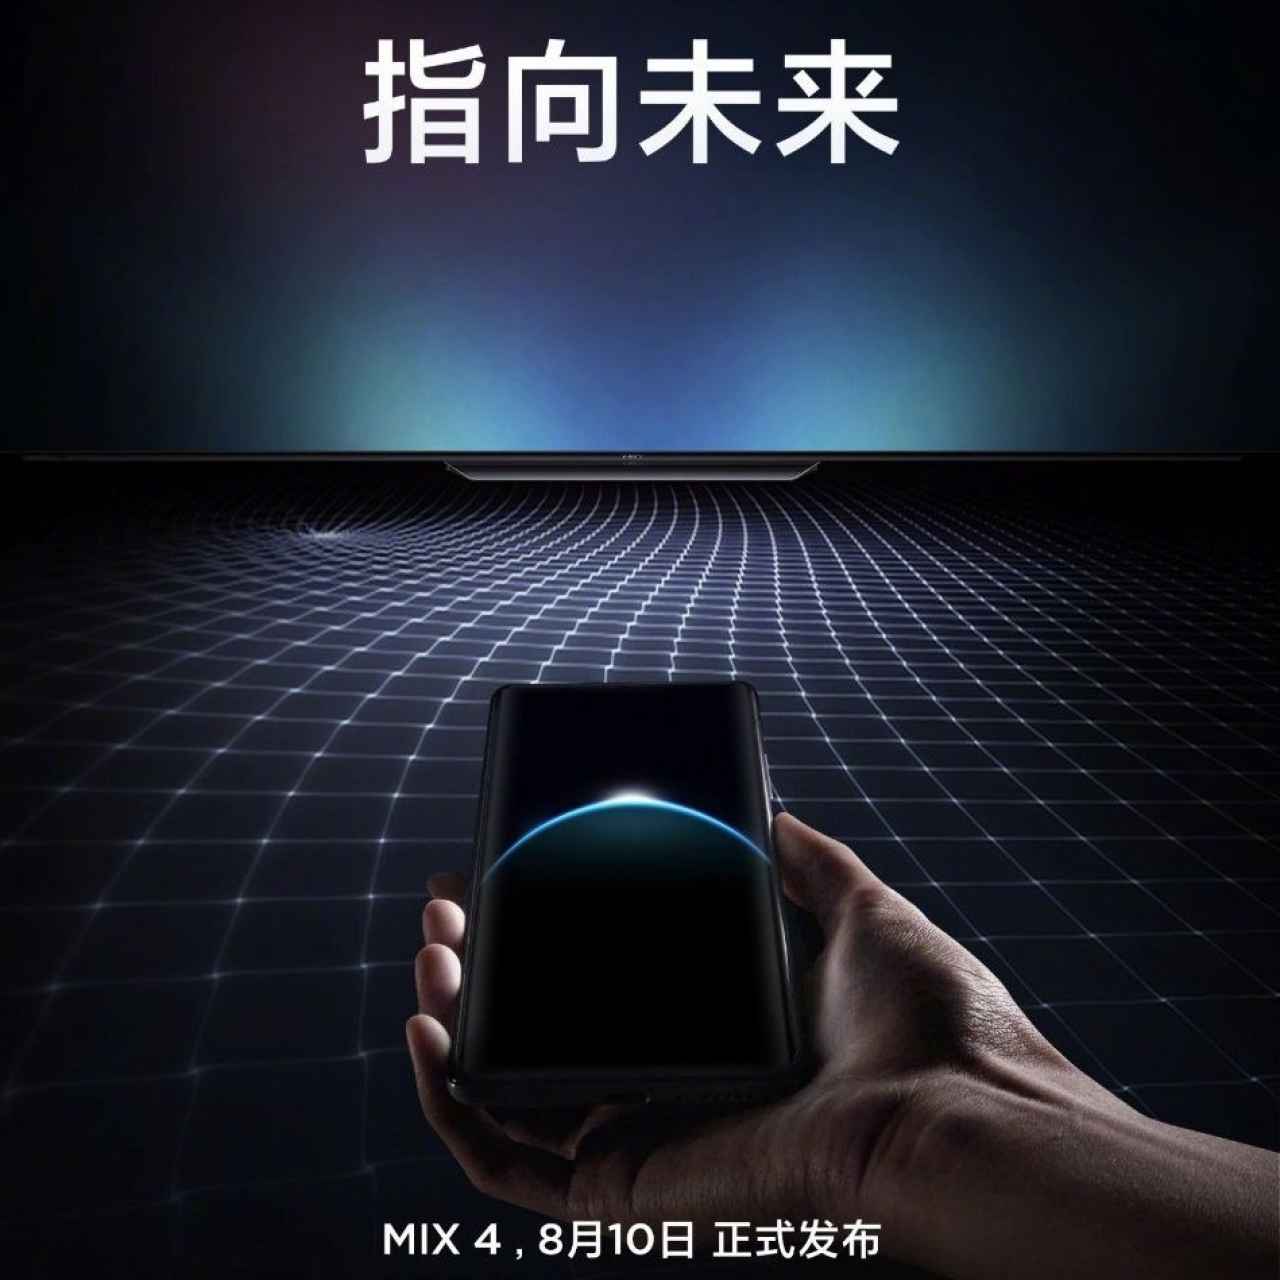 Xiaomi Mi MIX 4 poster